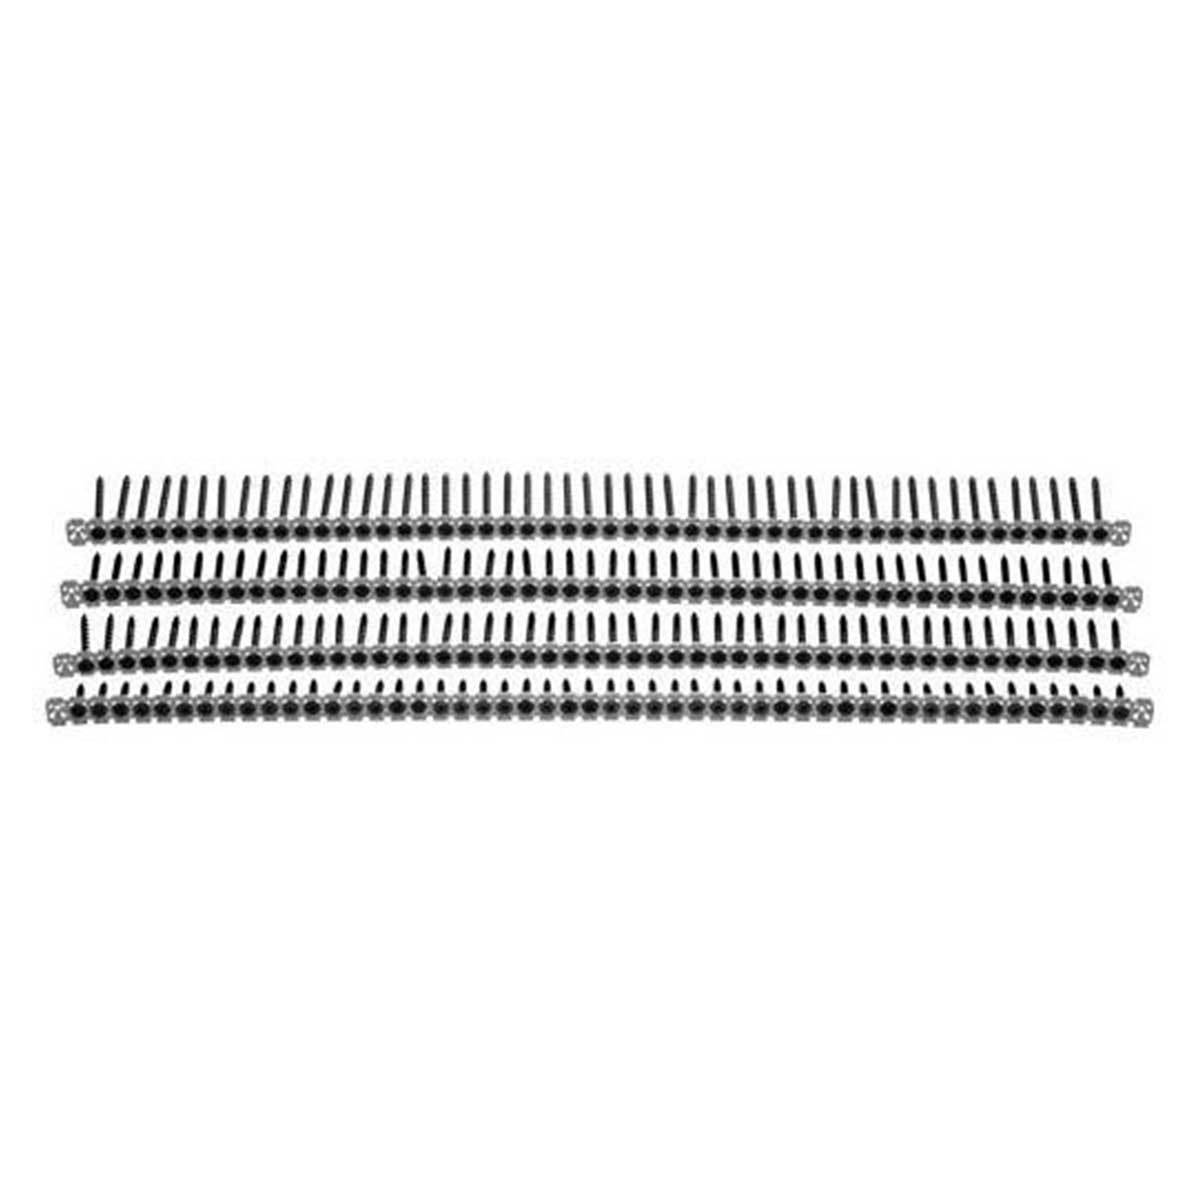 Four strips of Festool collated fine-thread drywall screws for autofeed screw gun.